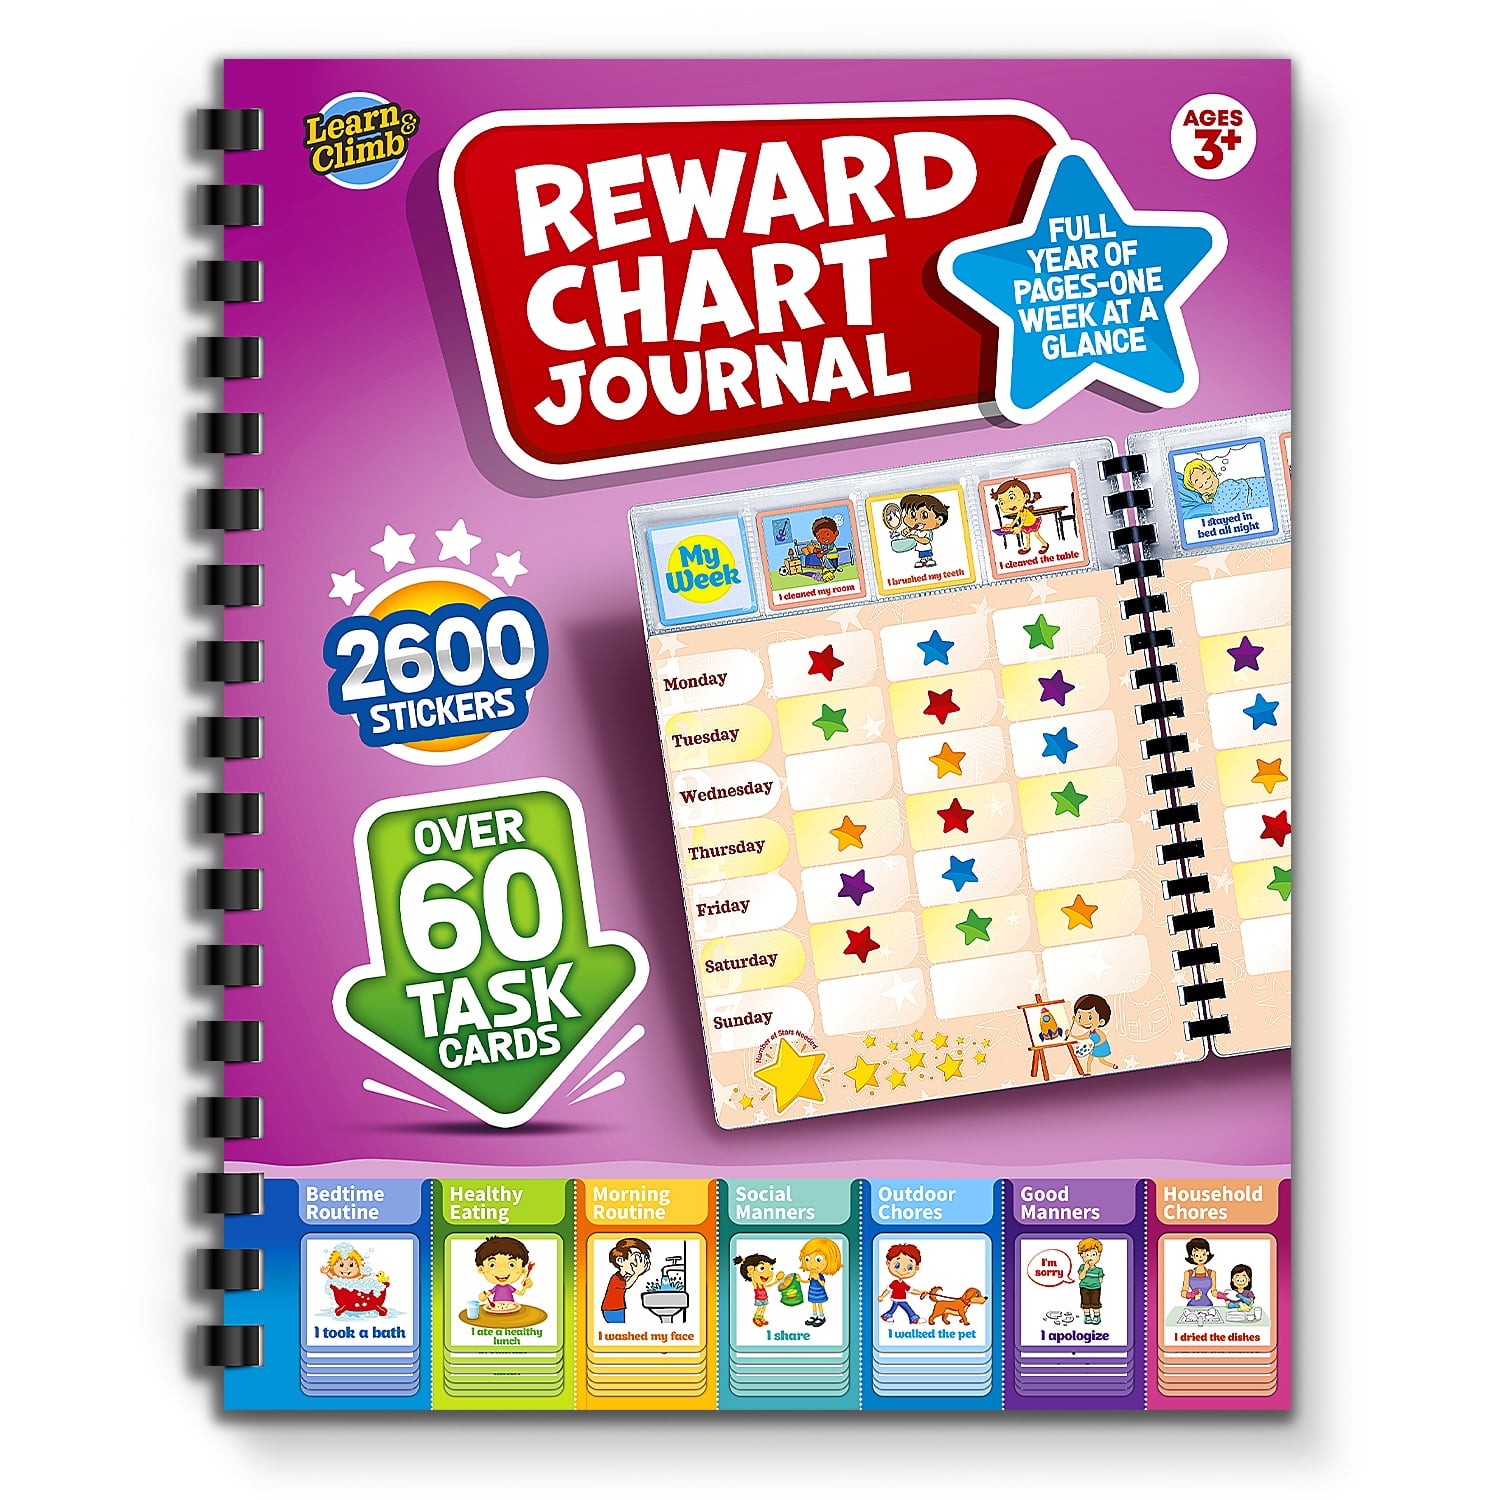 Mini Star Stickers Bundle 100 Sheets in Colors for Reward Behavior Chart